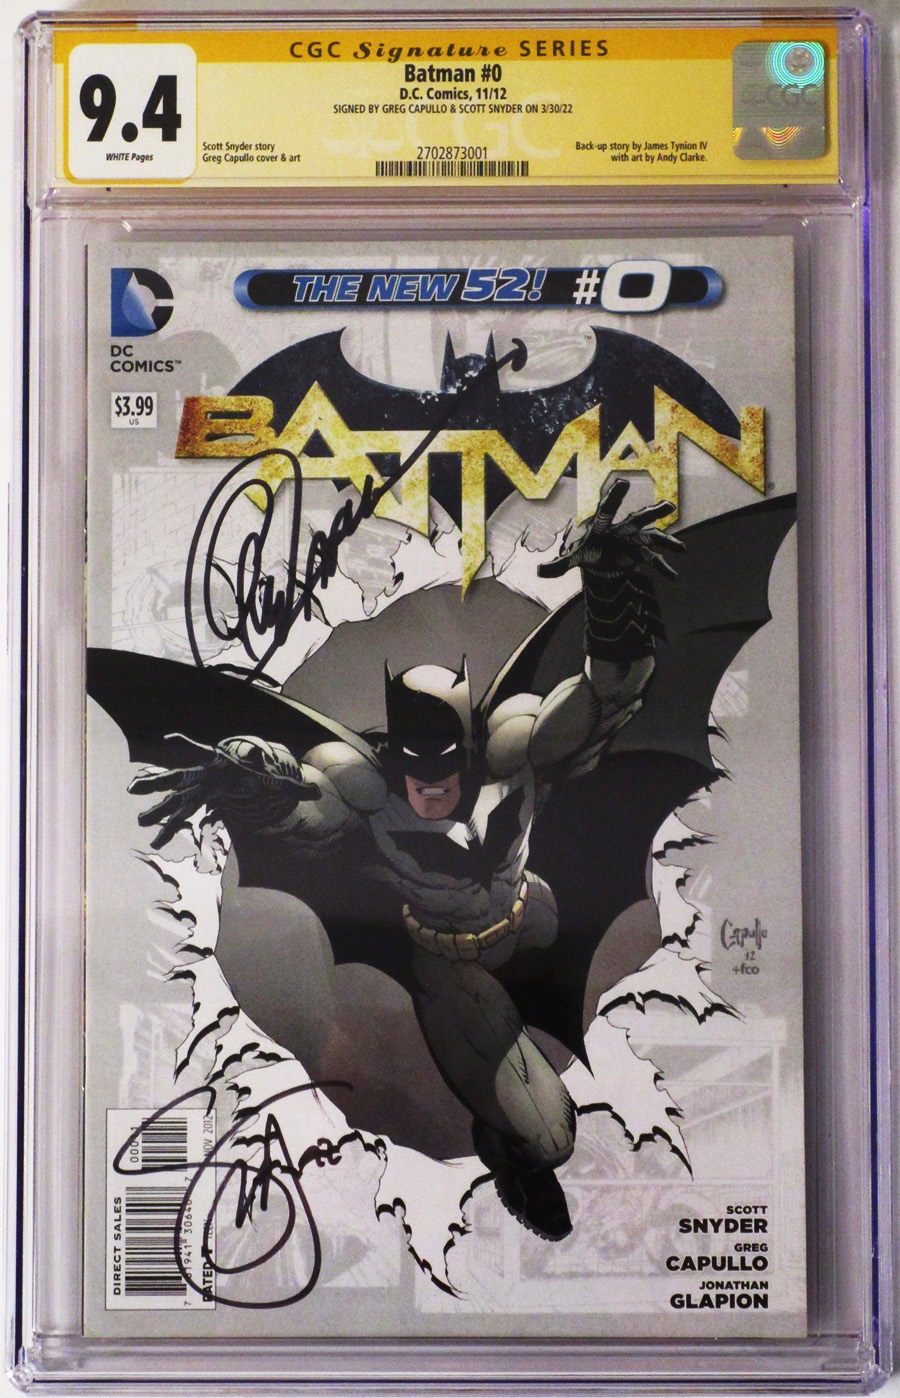 Batman Vol 2 #0 Cover G Regular Greg Capullo Cover Signed By Scott Snyder and Greg Capullo CGC 9.4